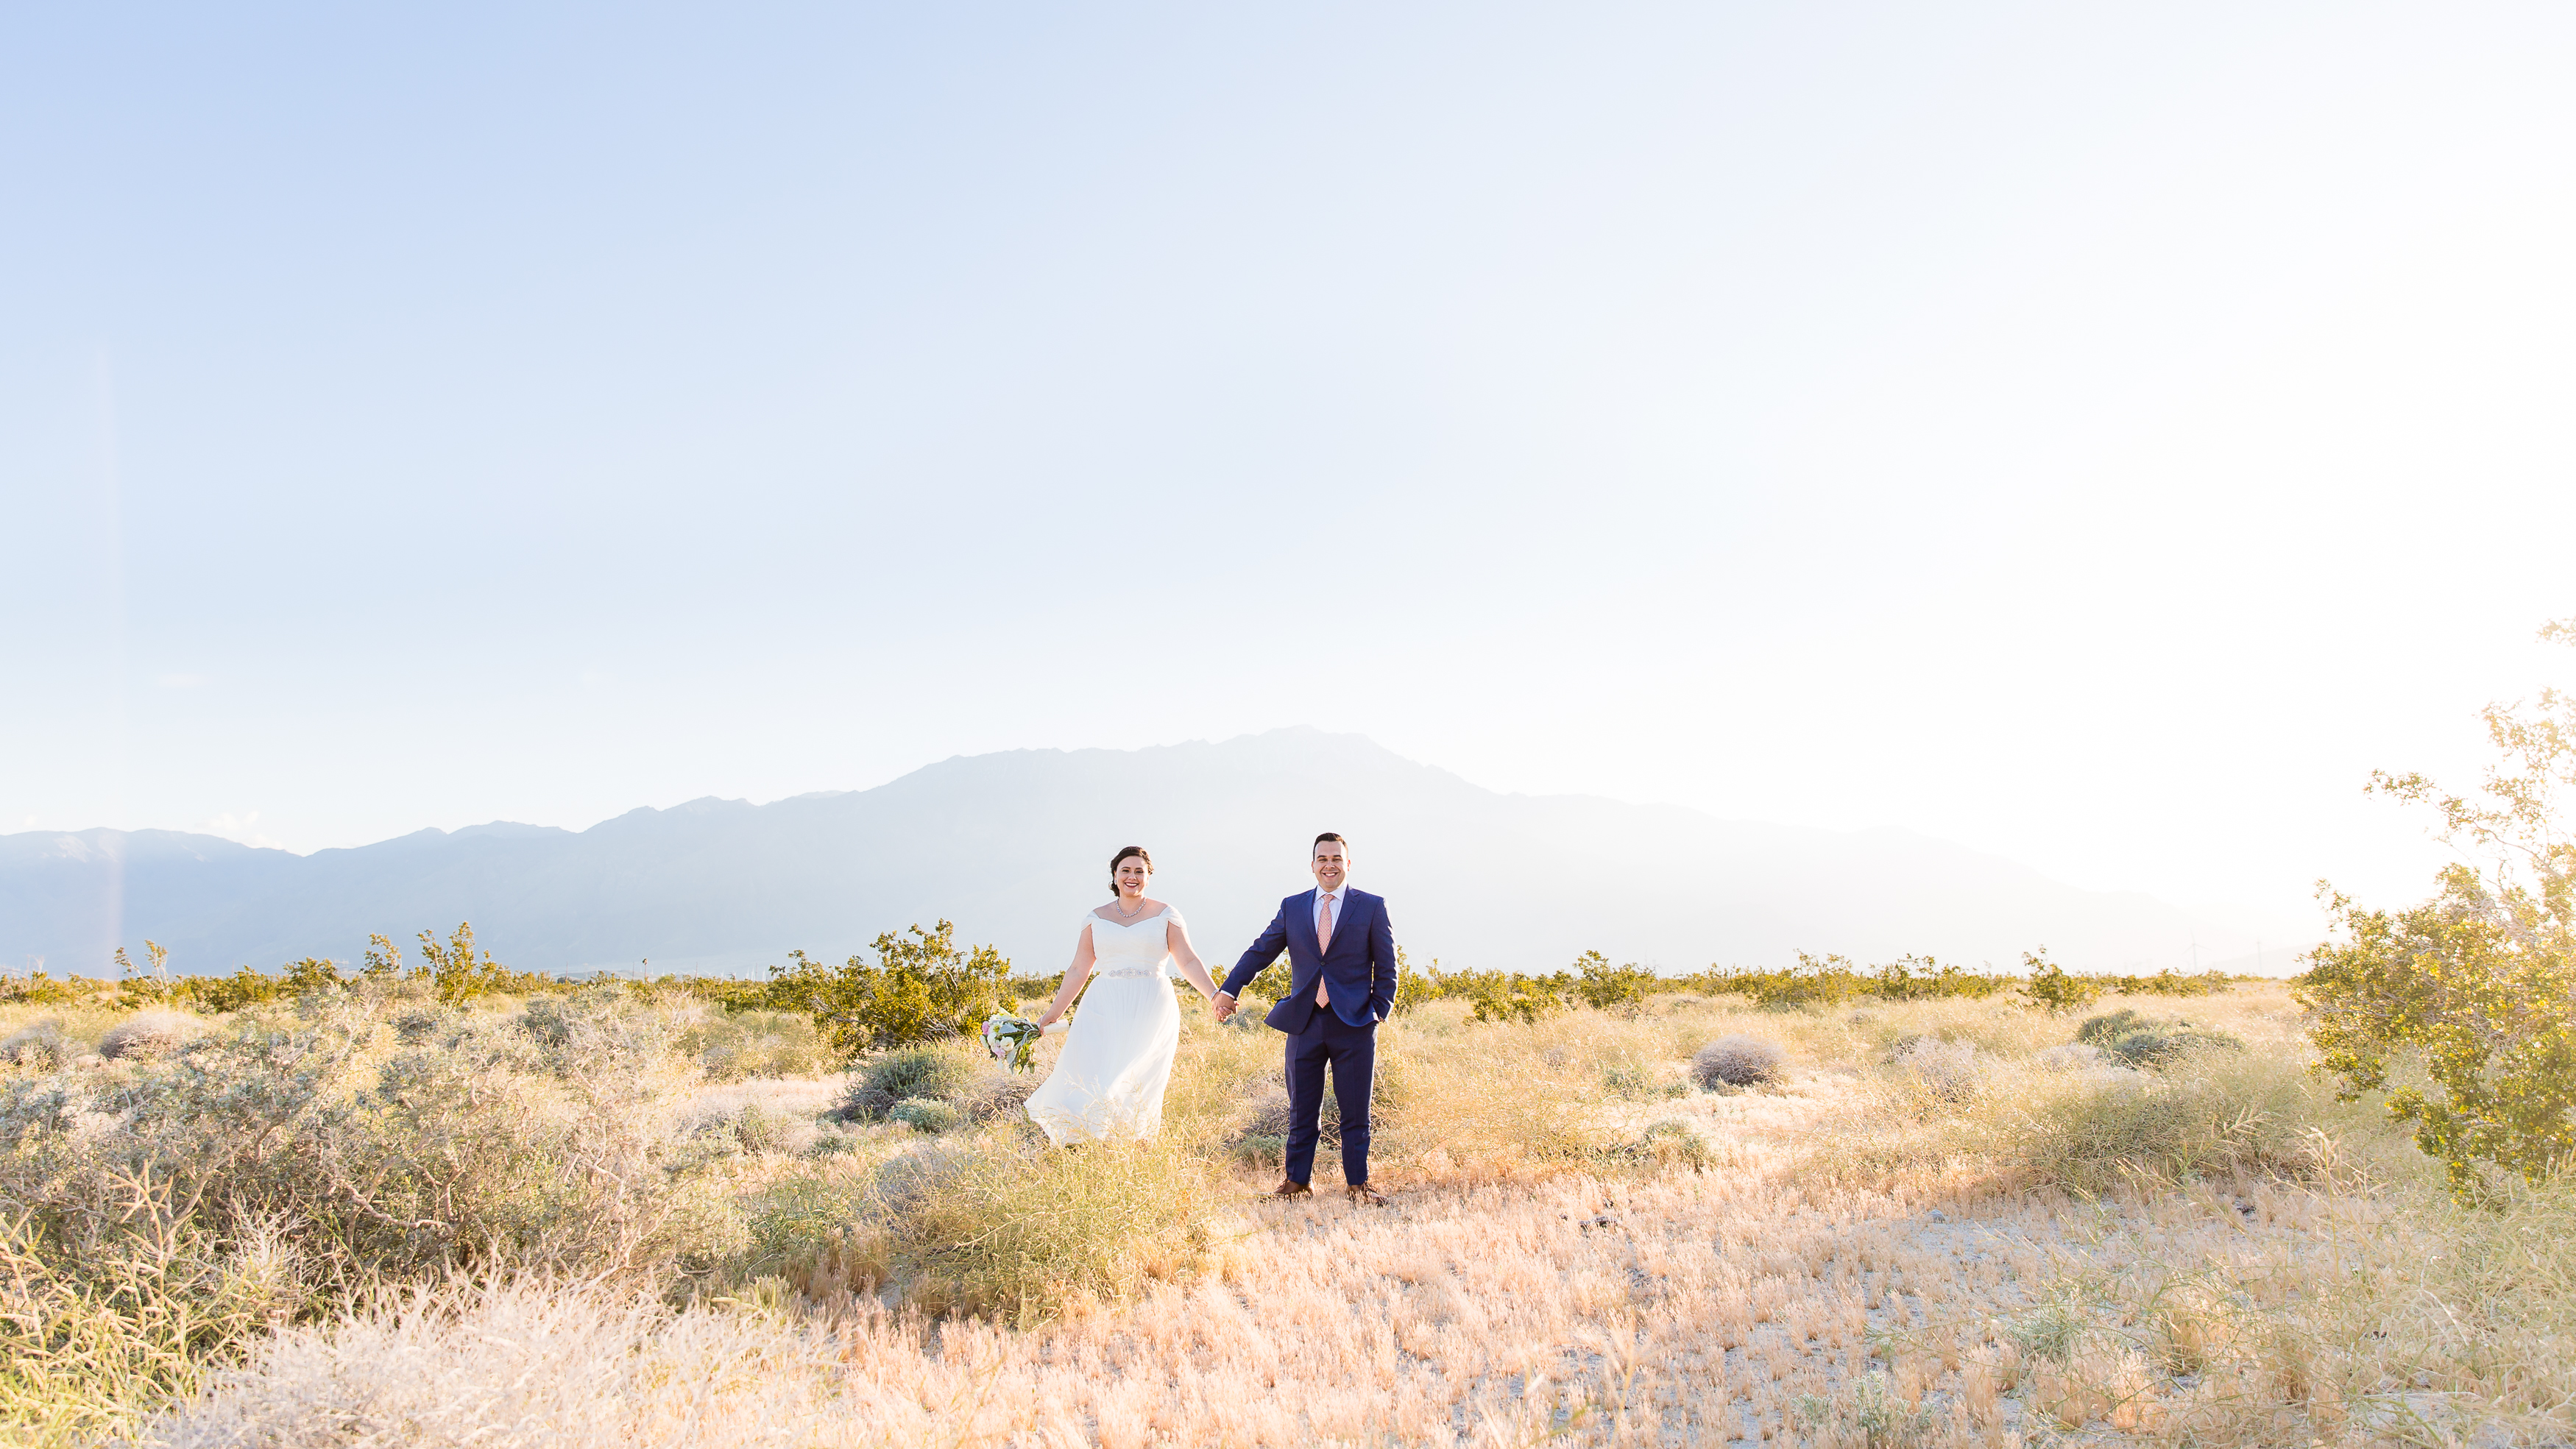 Wedding couple holding hands in vast desert, by Stefani Ciotti